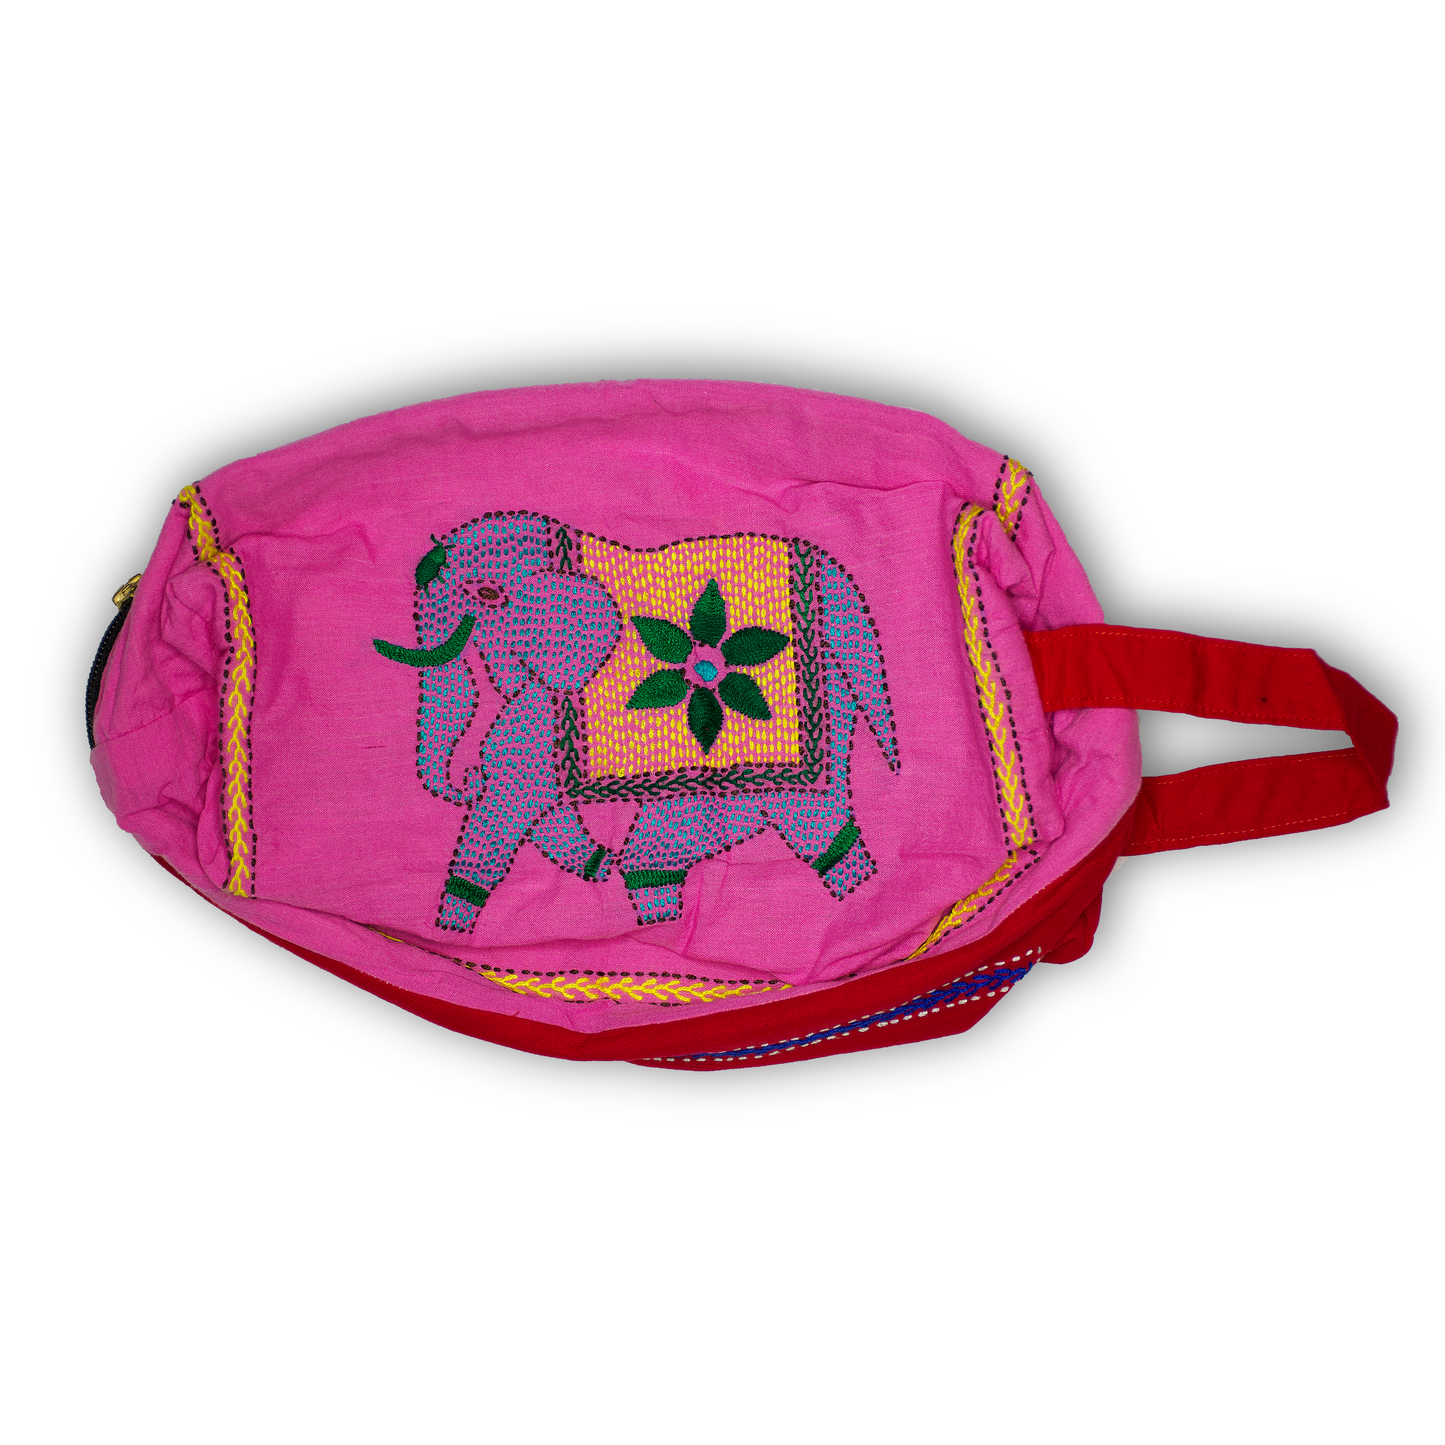 Pouch Bags - Dinajpur (Elephant) Design